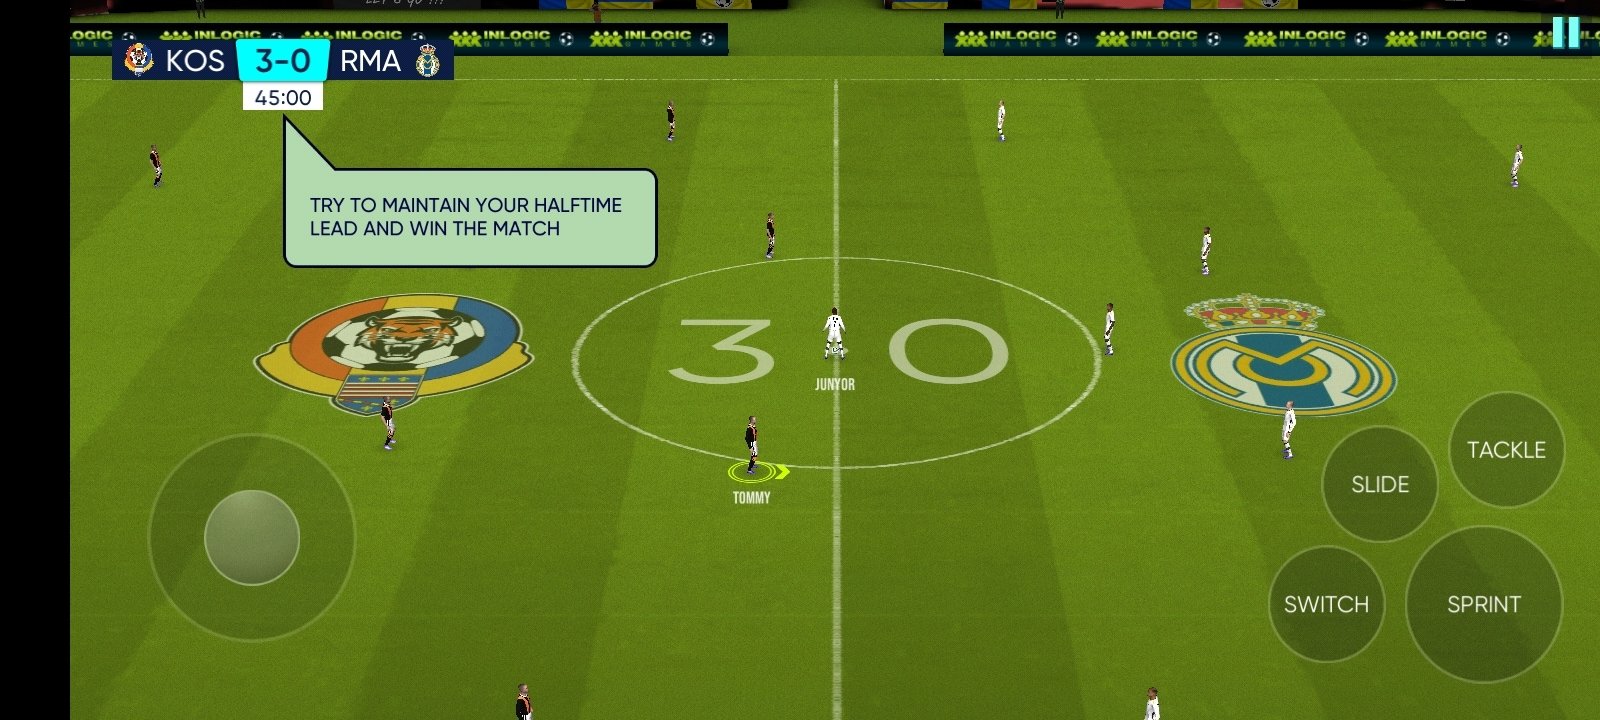 Football Cup 2023 - Futebol APK (Android Game) - Baixar Grátis